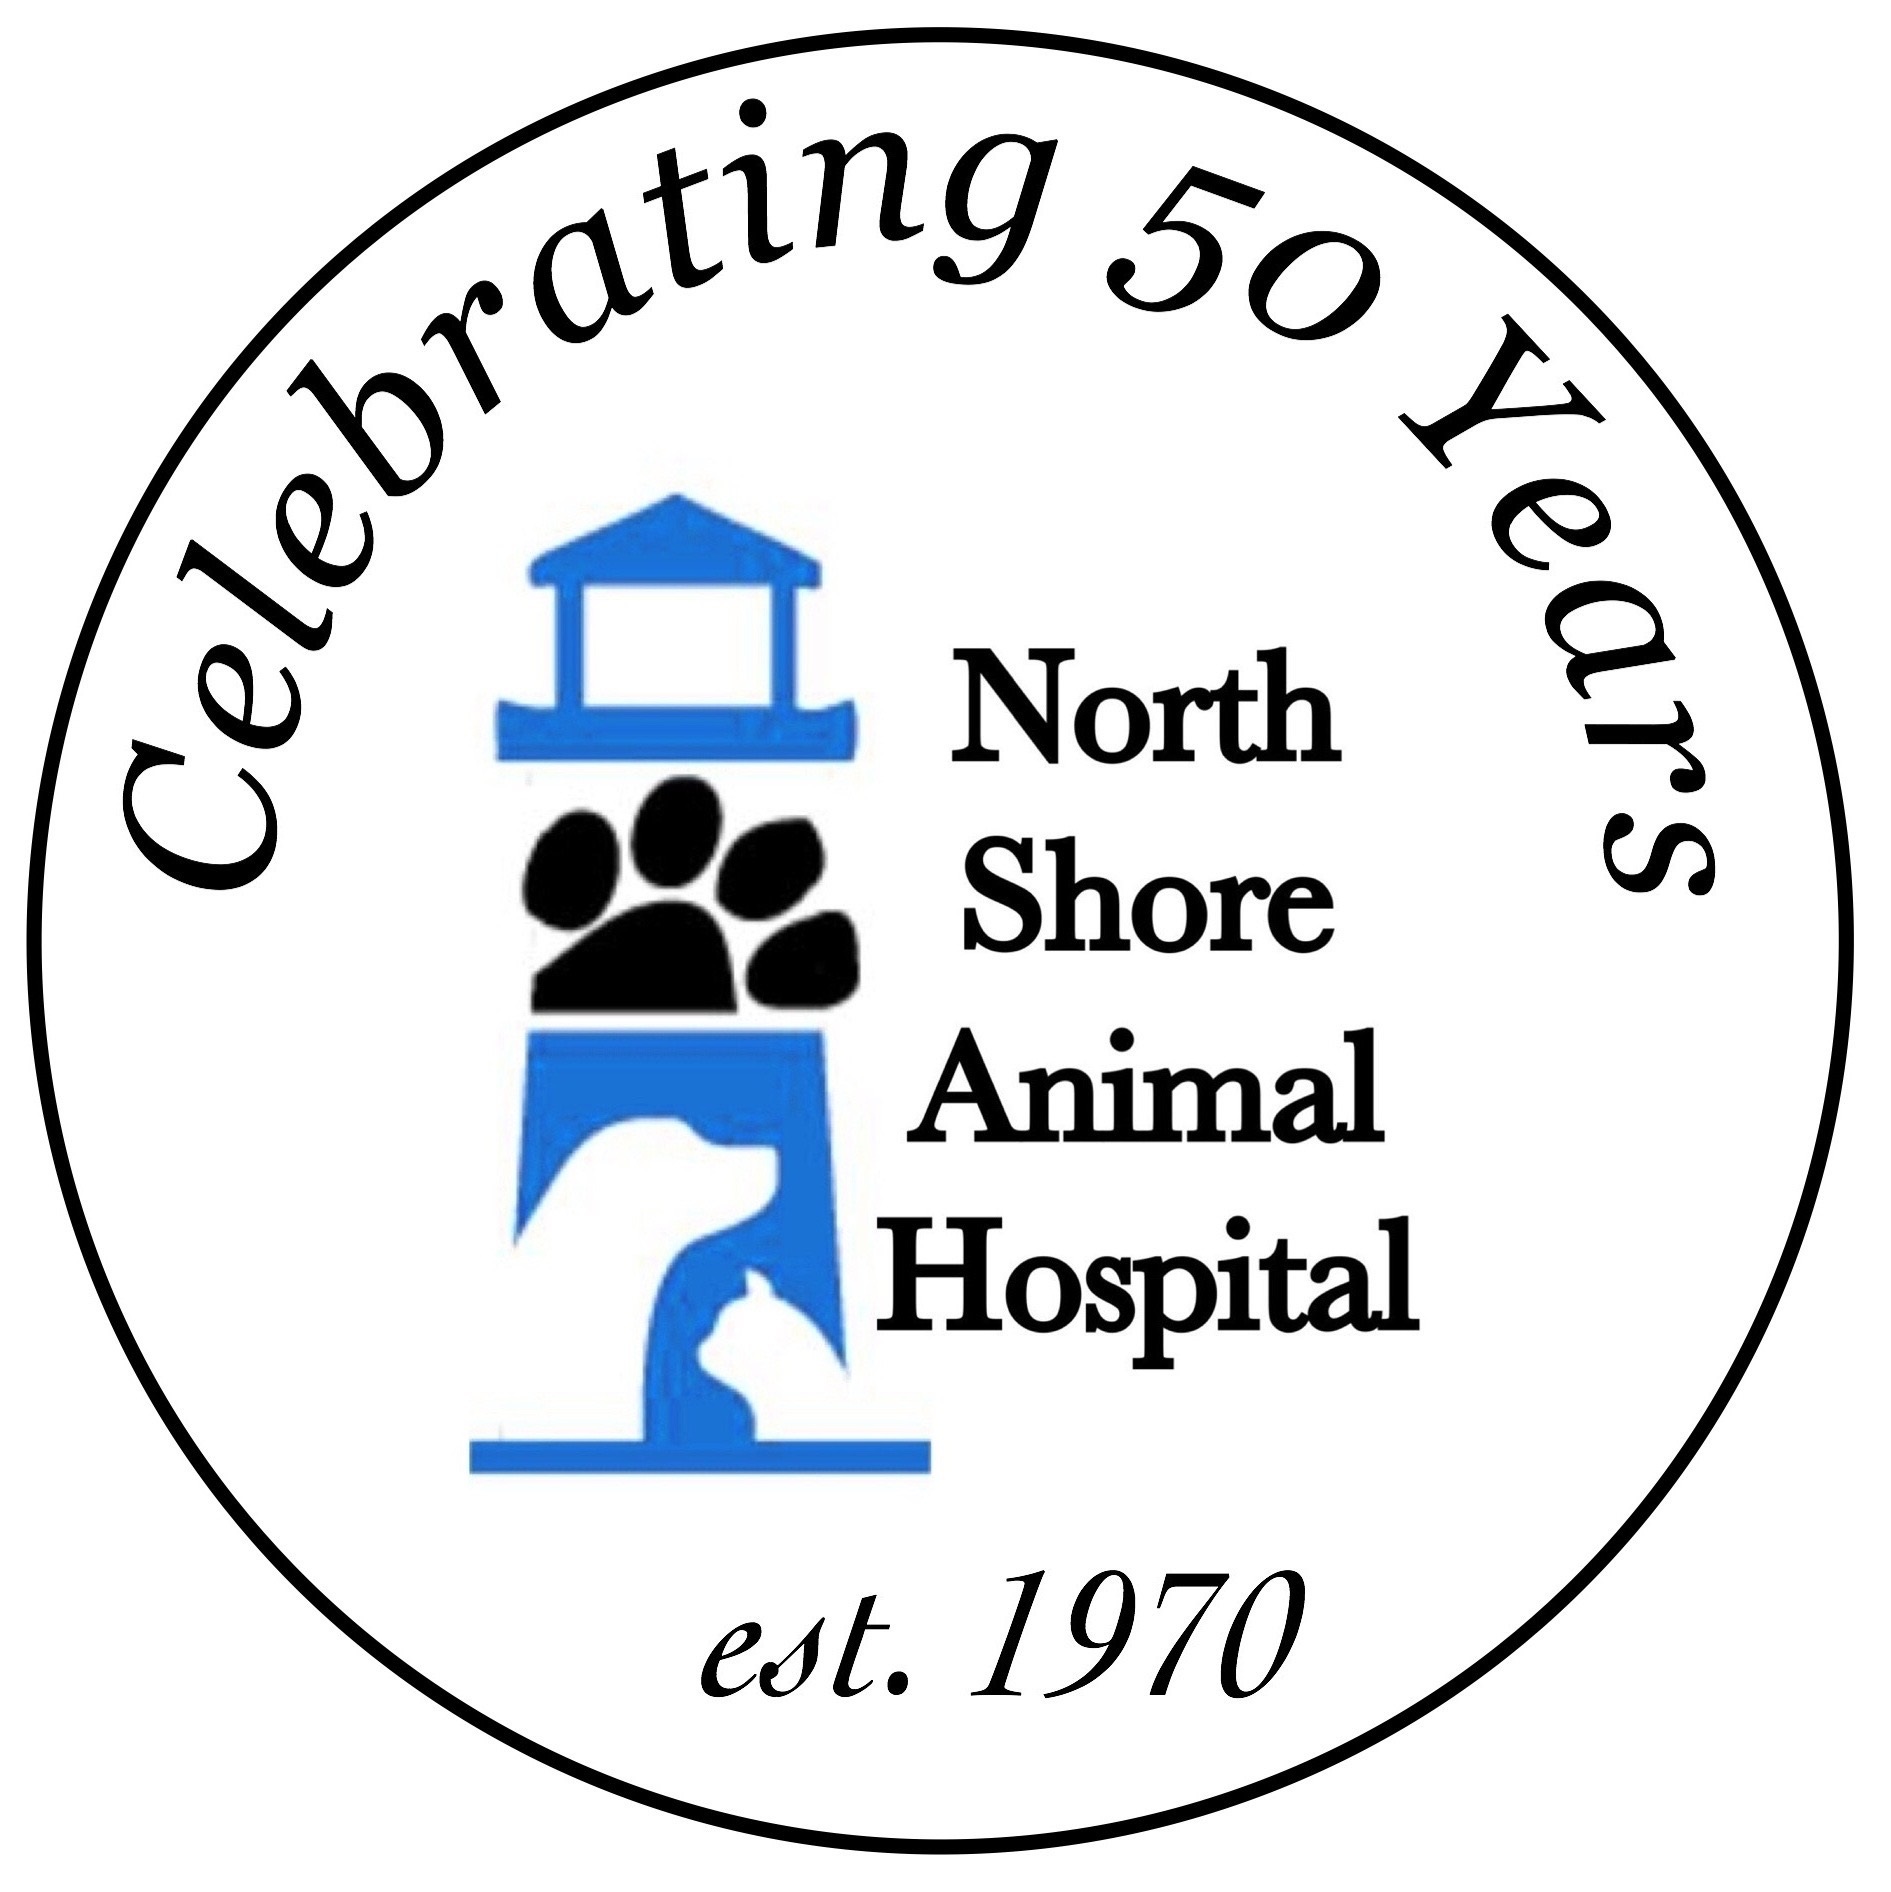 North Shore Animal Hospital 50th anniversary logo